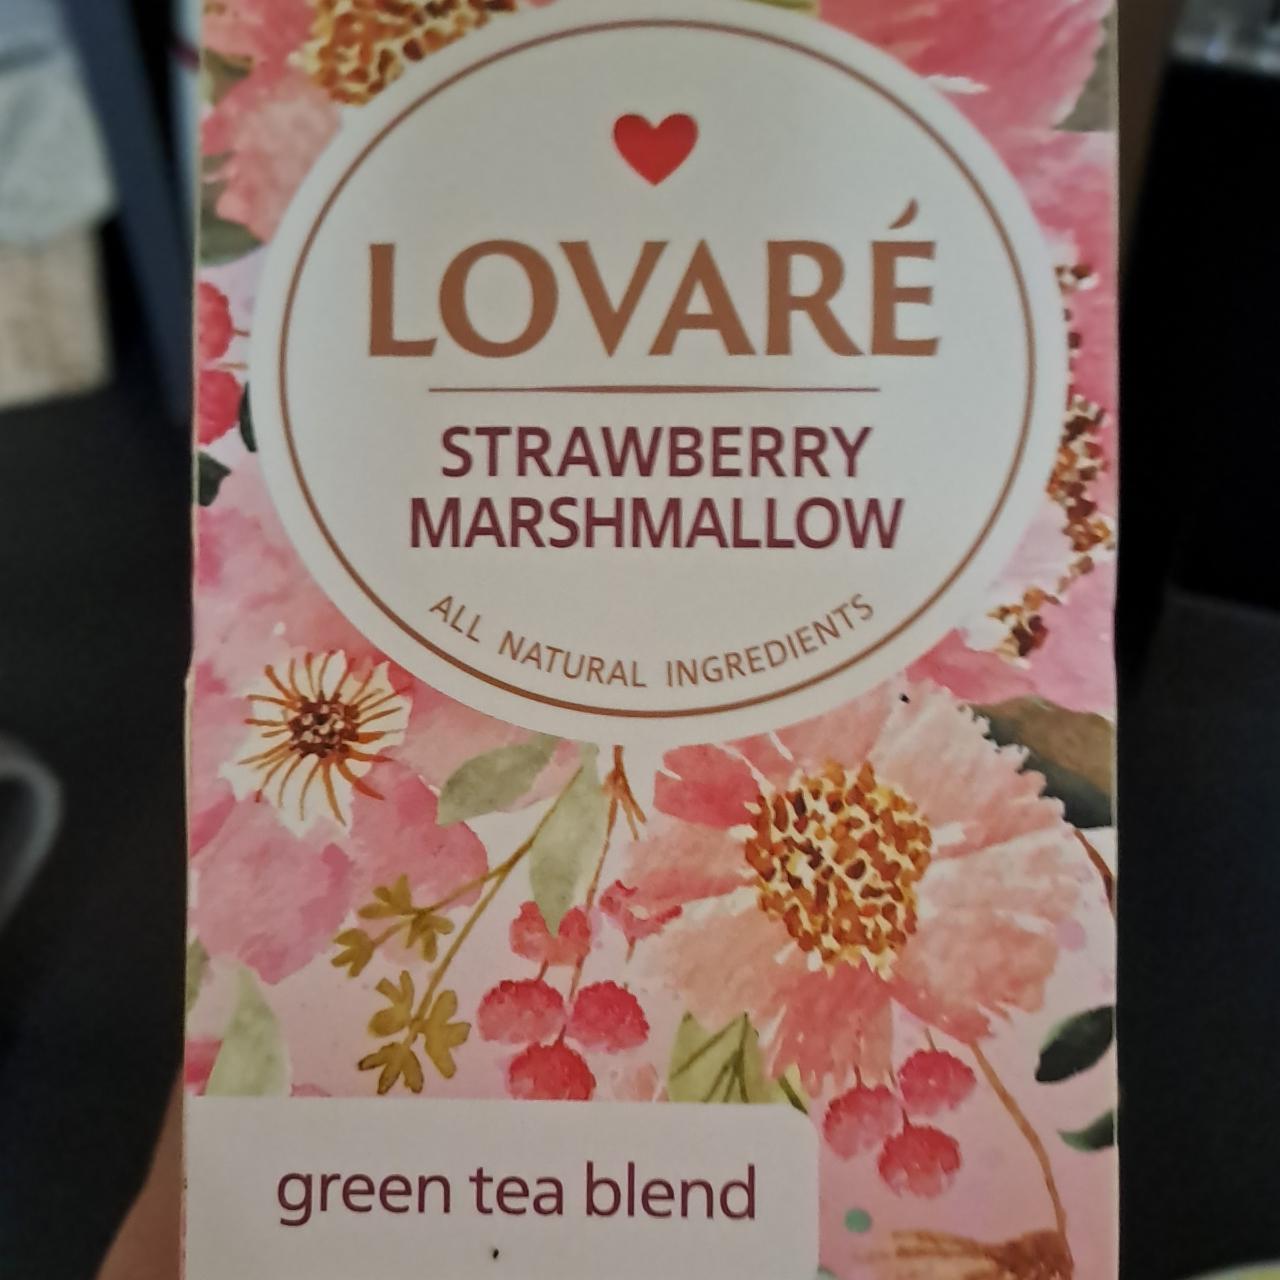 Fotografie - Green tea blend strawberry marshmallow Lovaré